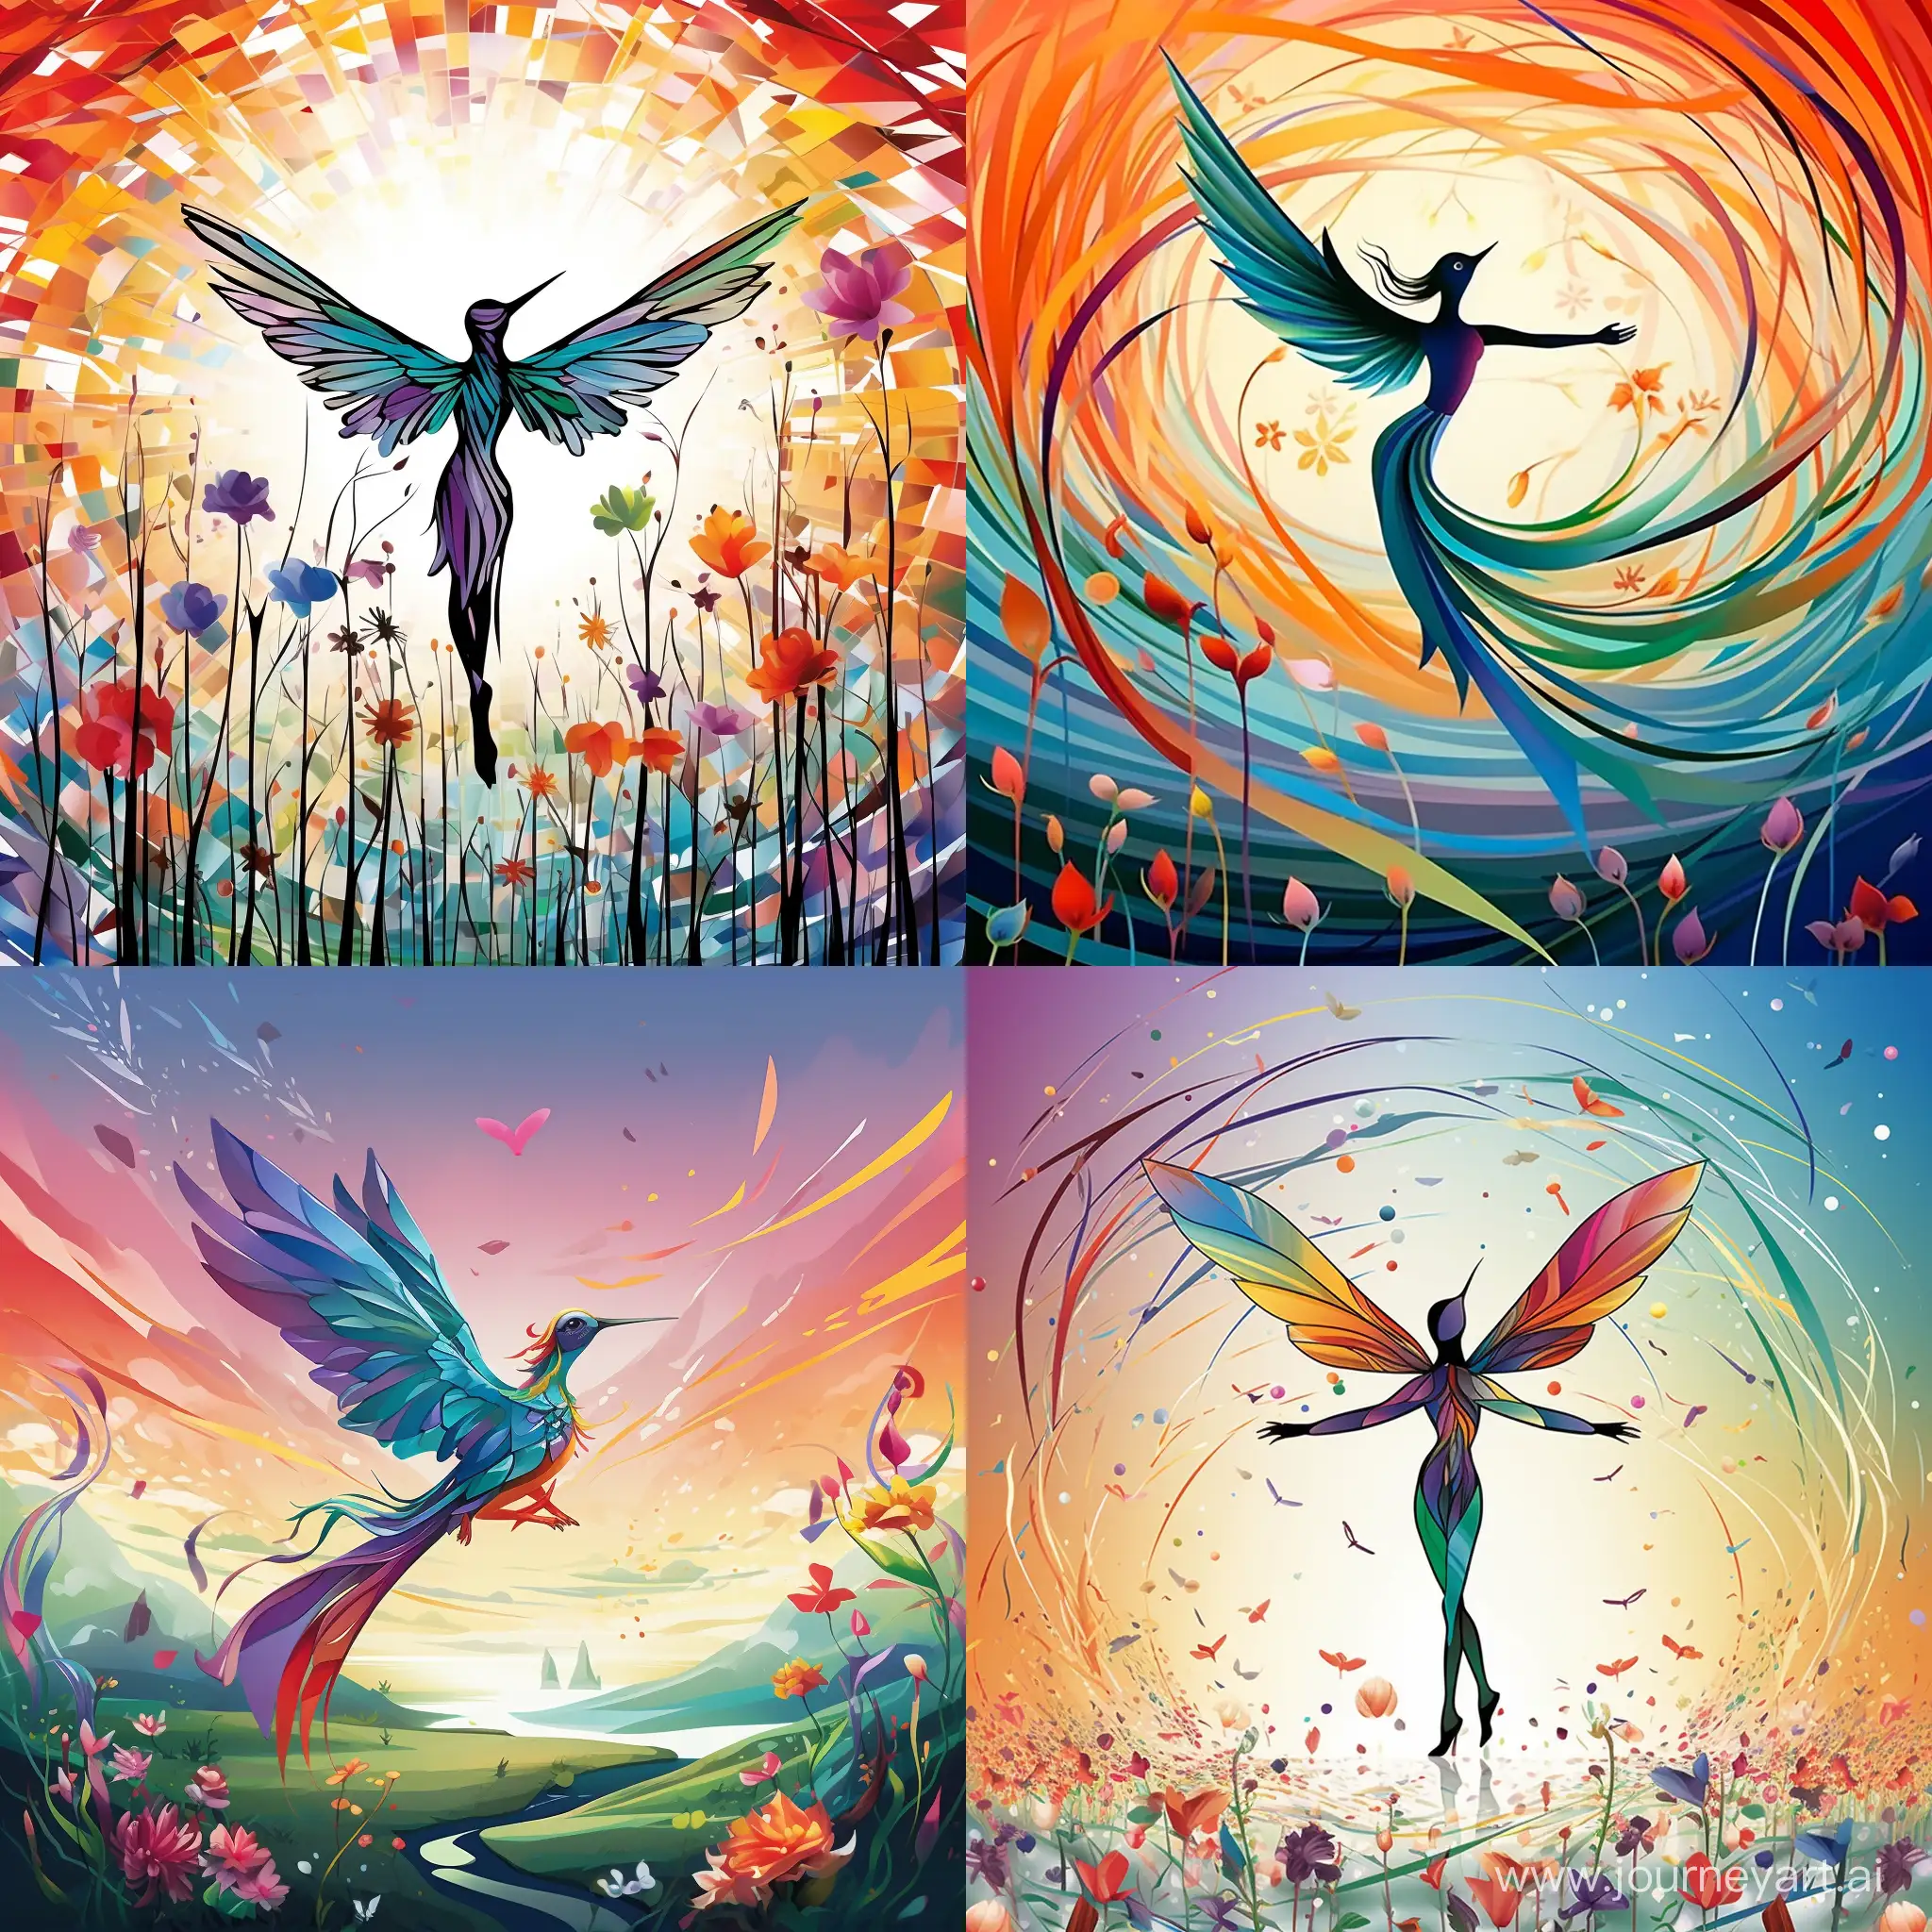 Graceful-Hummingbird-with-Bladelike-Wings-in-Fantasy-Meadow